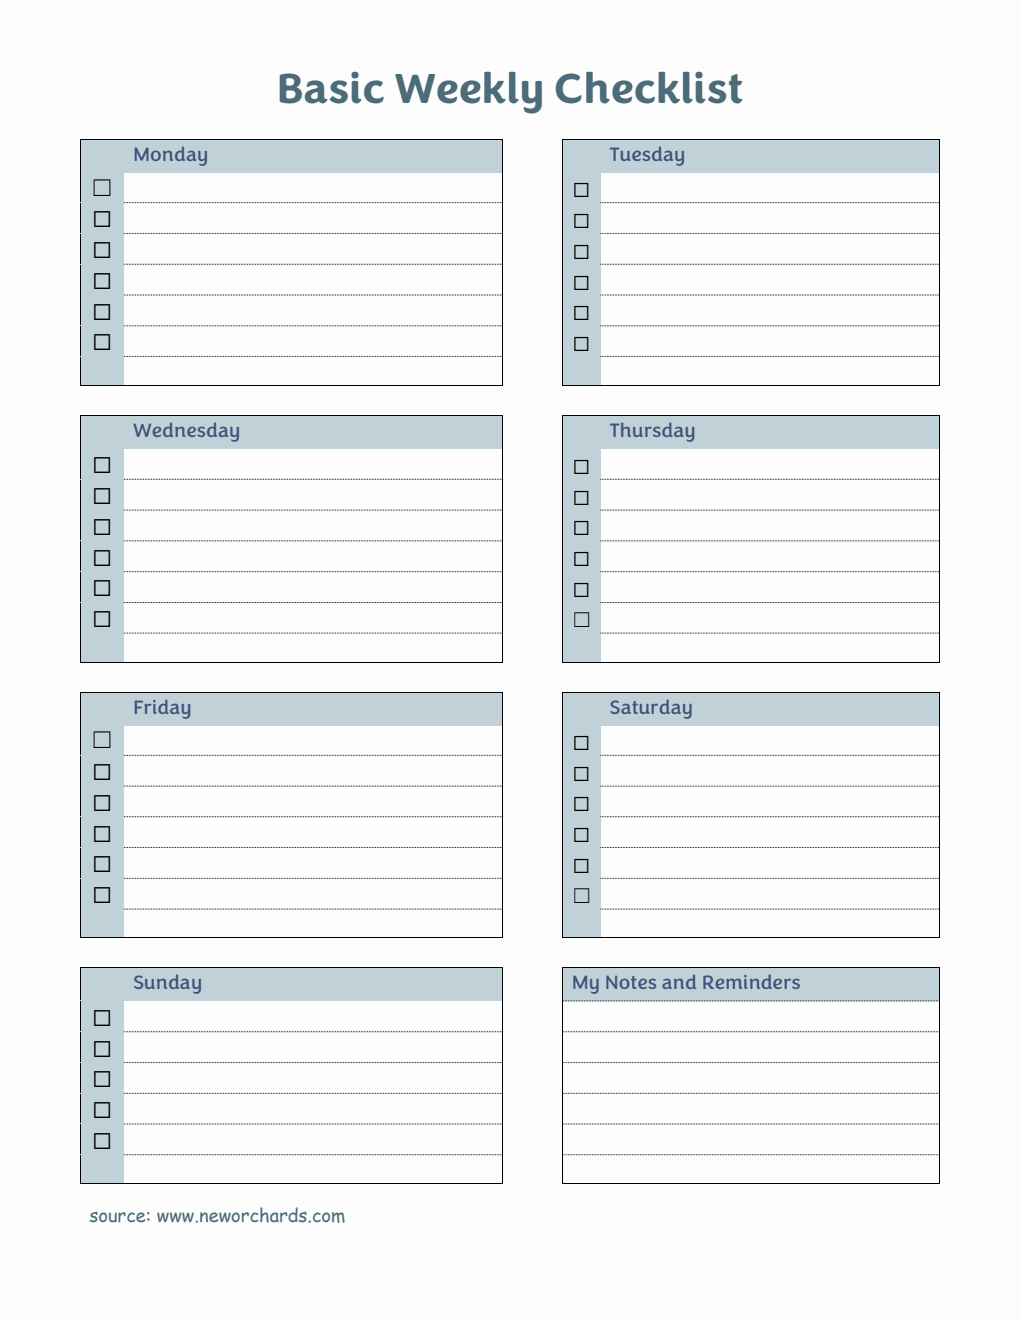 Basic Weekly Checklist Template PDF